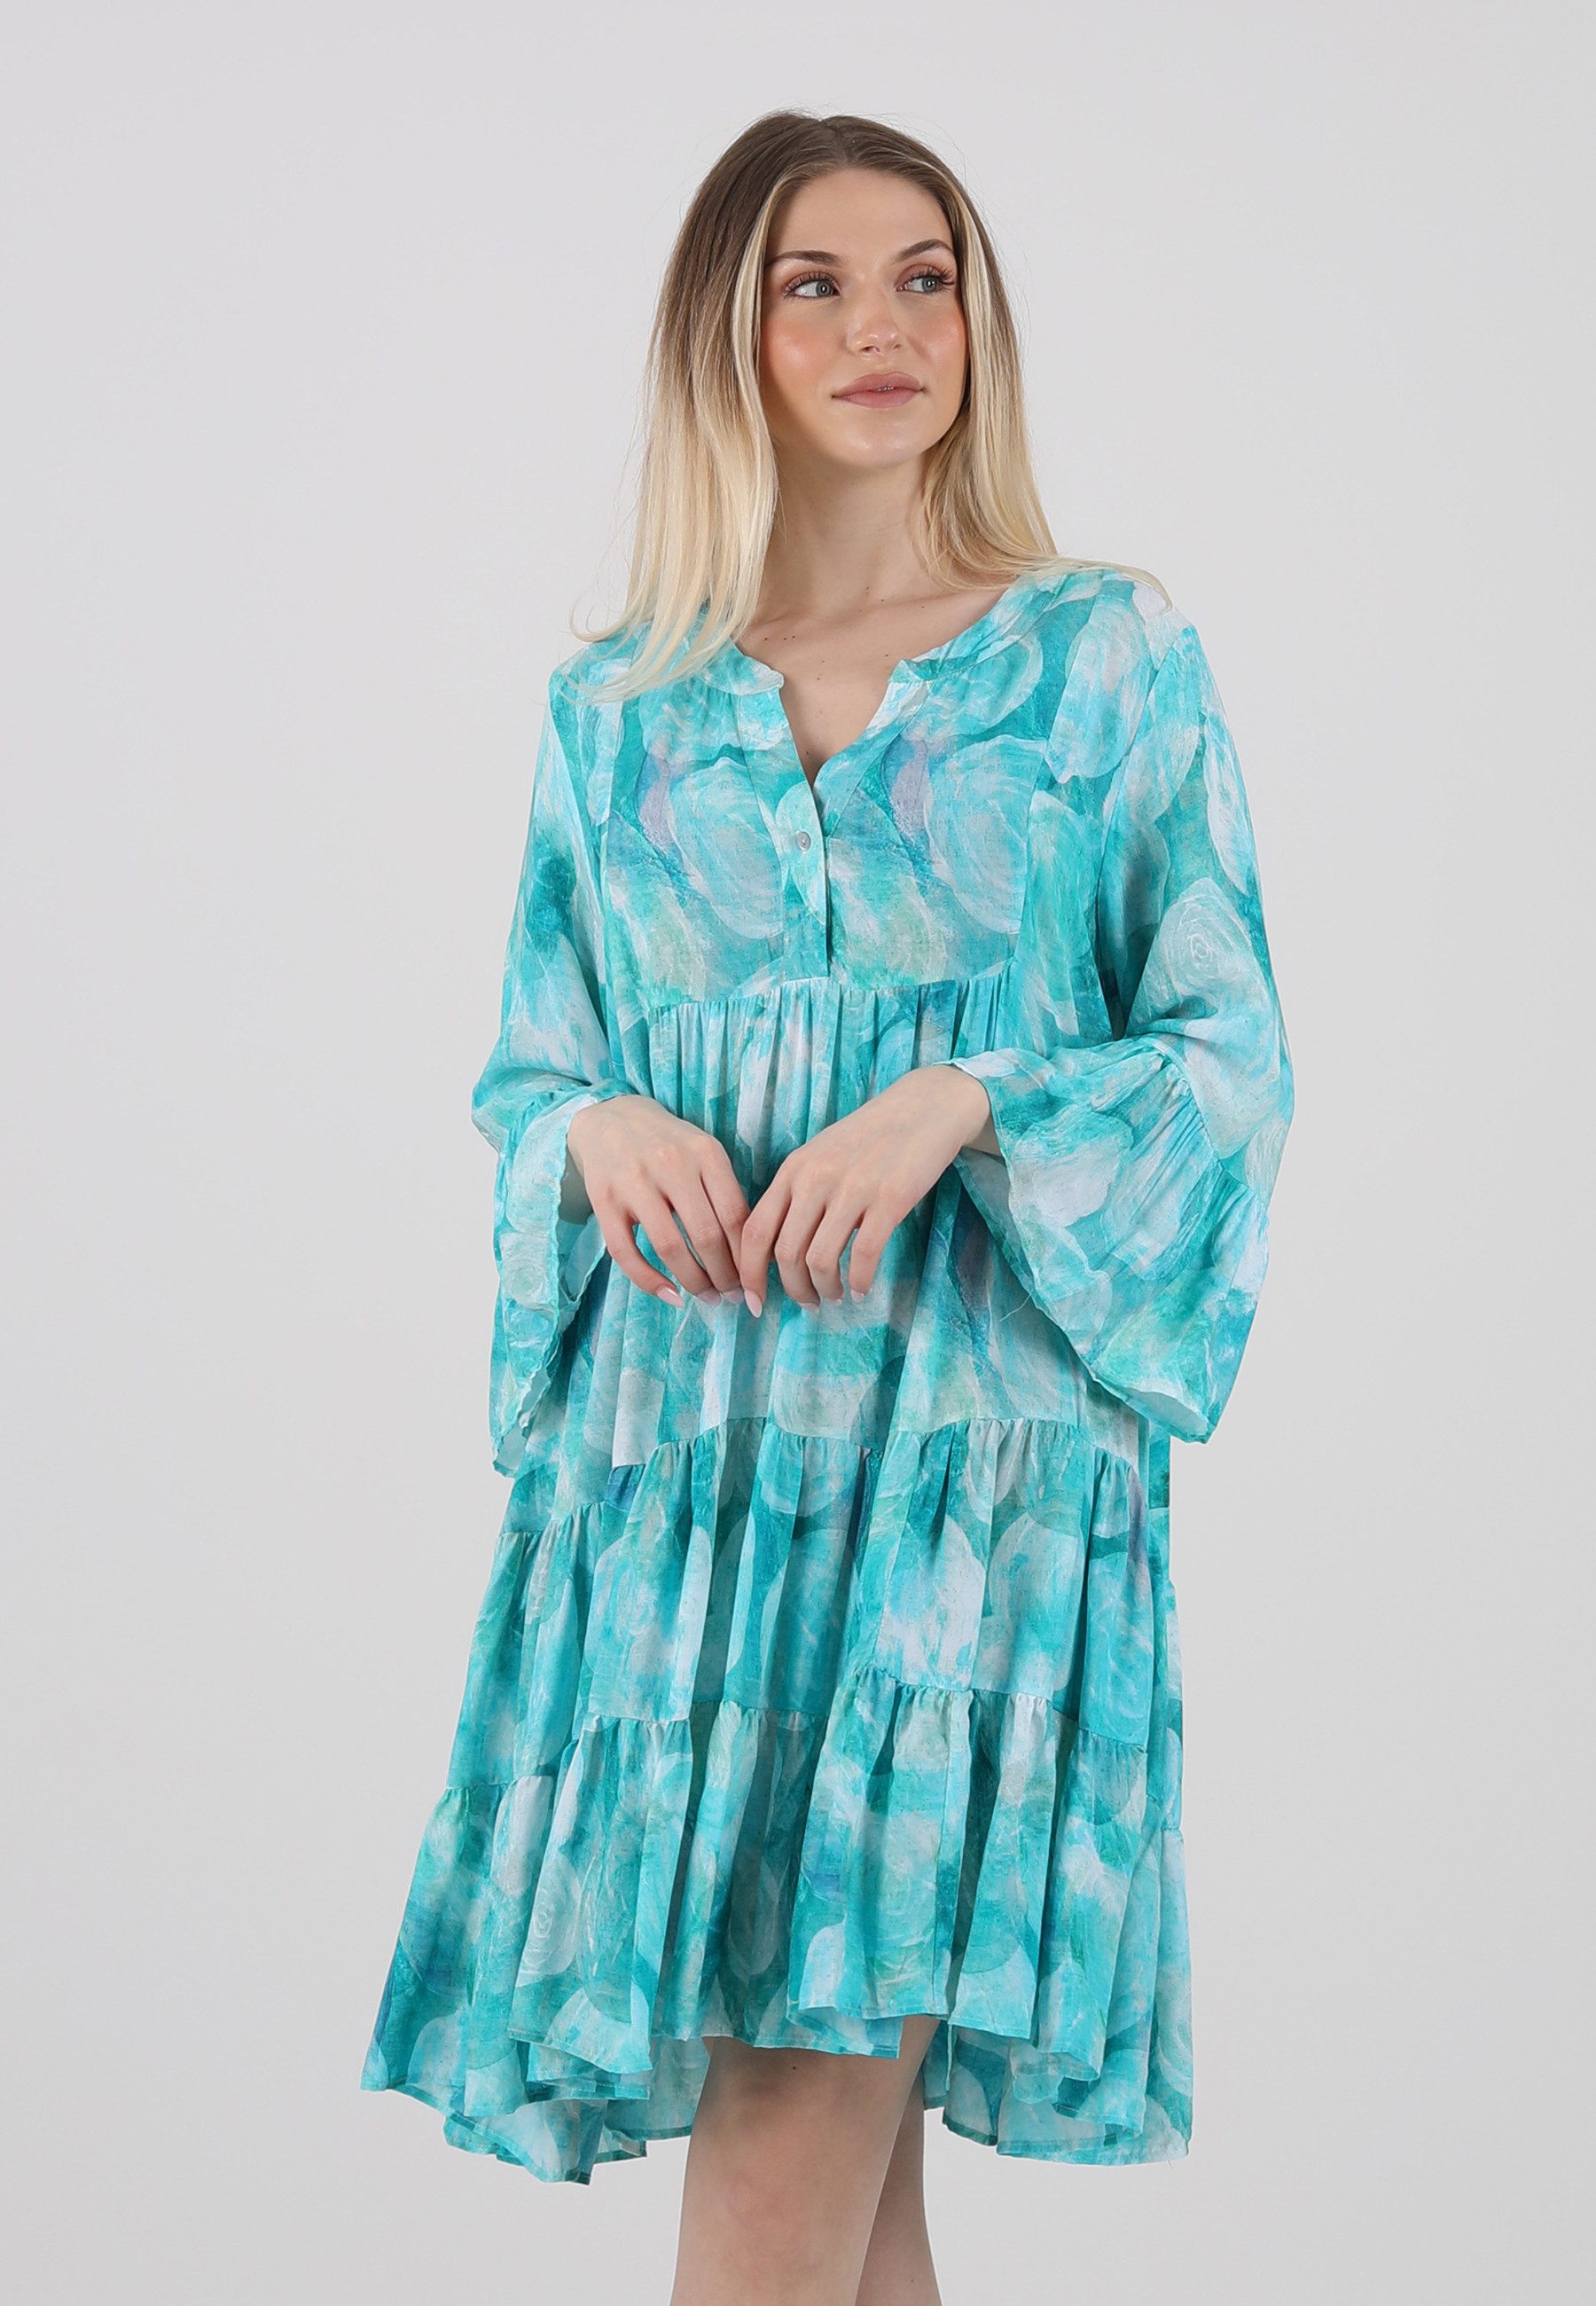 YC Fashion & Style Tunikakleid Charmantes Boho-Kleid für Sommerträume